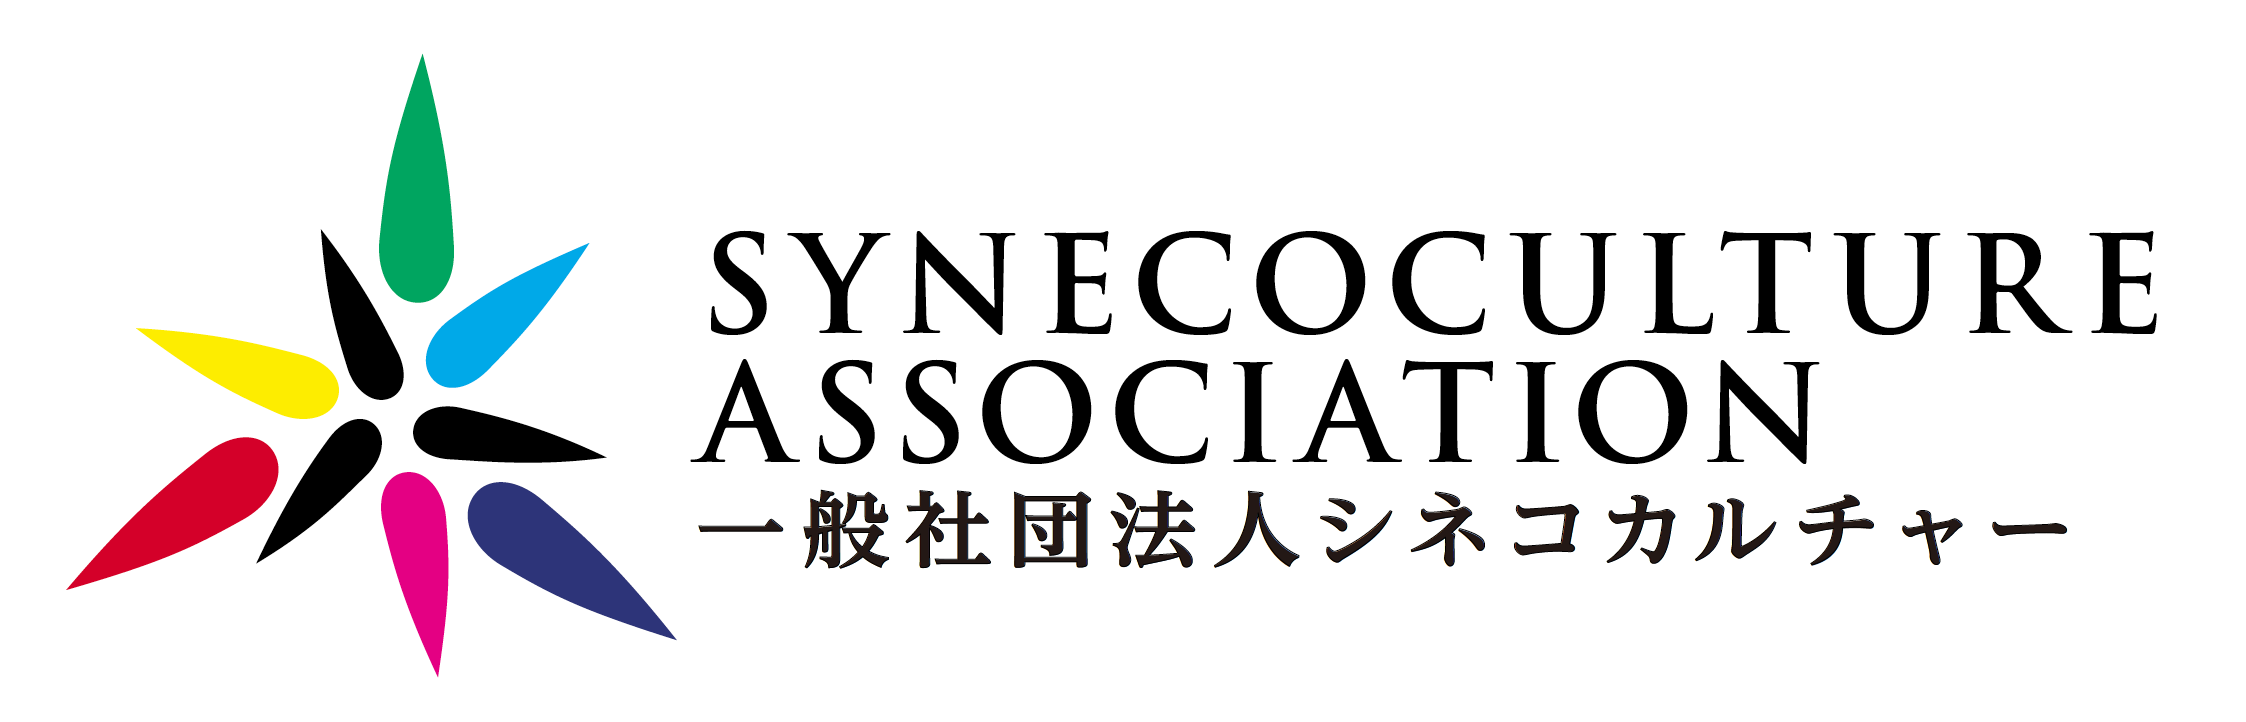 Synecoculture Association